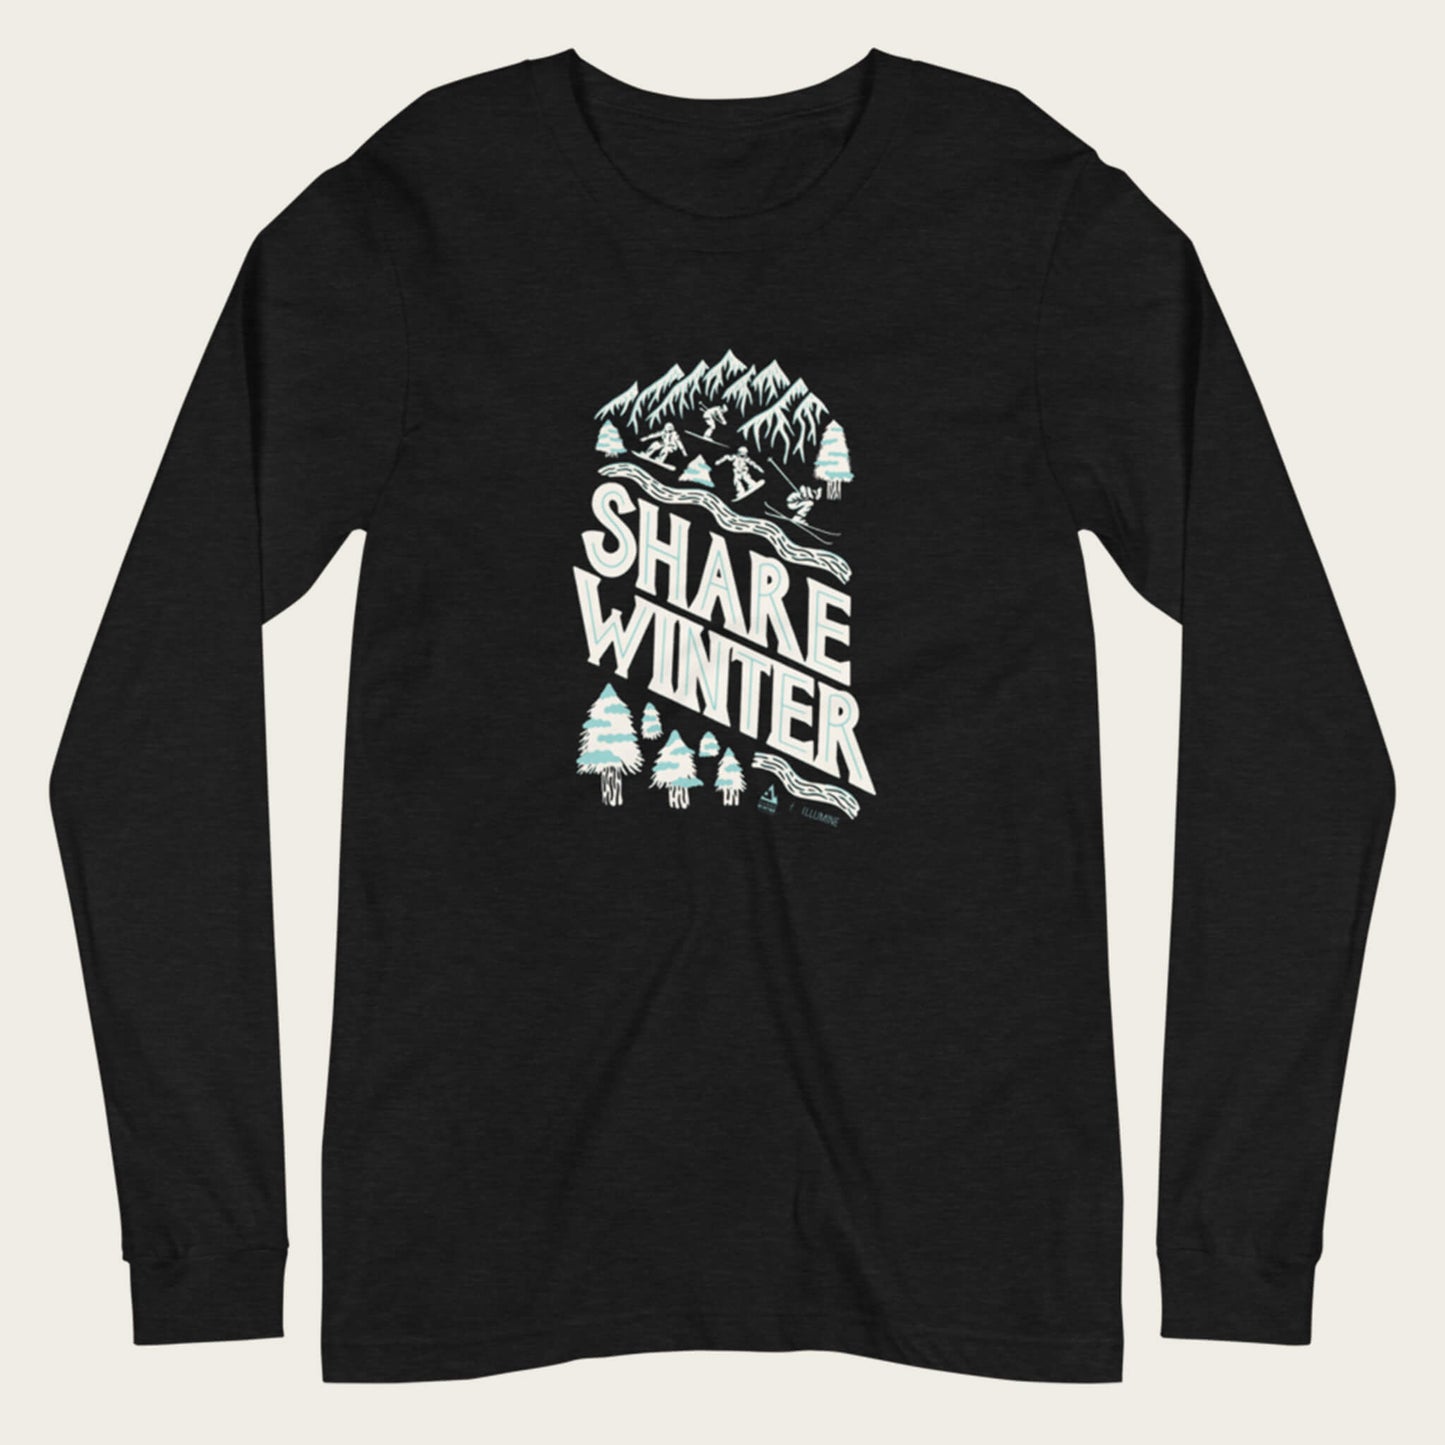 Share Winter Long Sleeve - Black